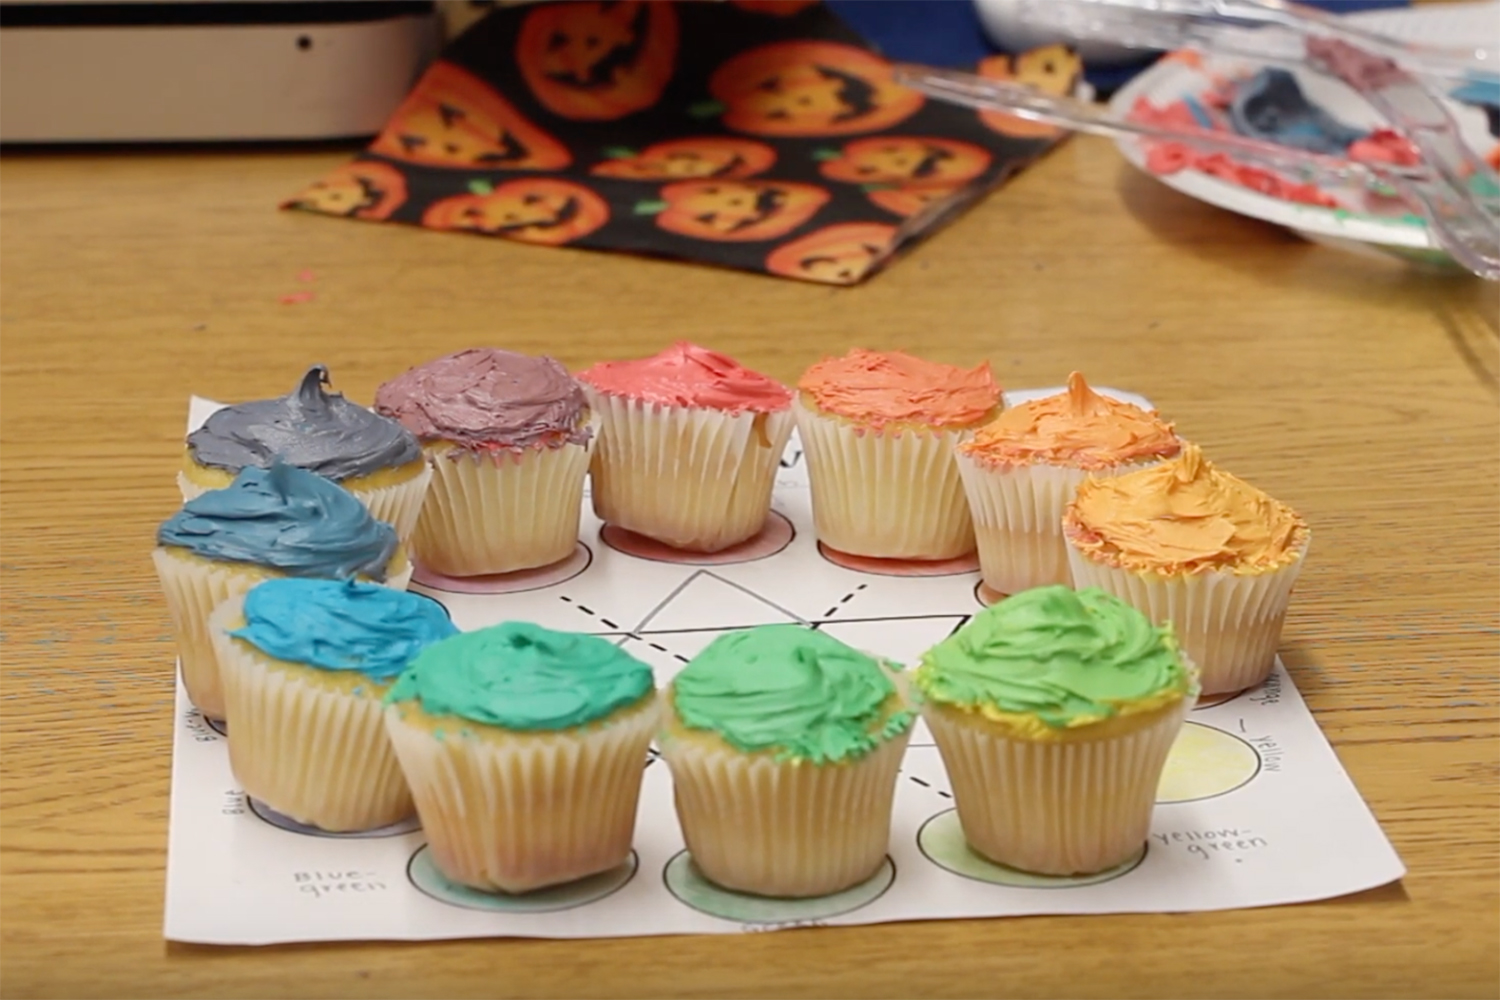 VIDEO: Fashion Design I decorates cupcakes for color unit